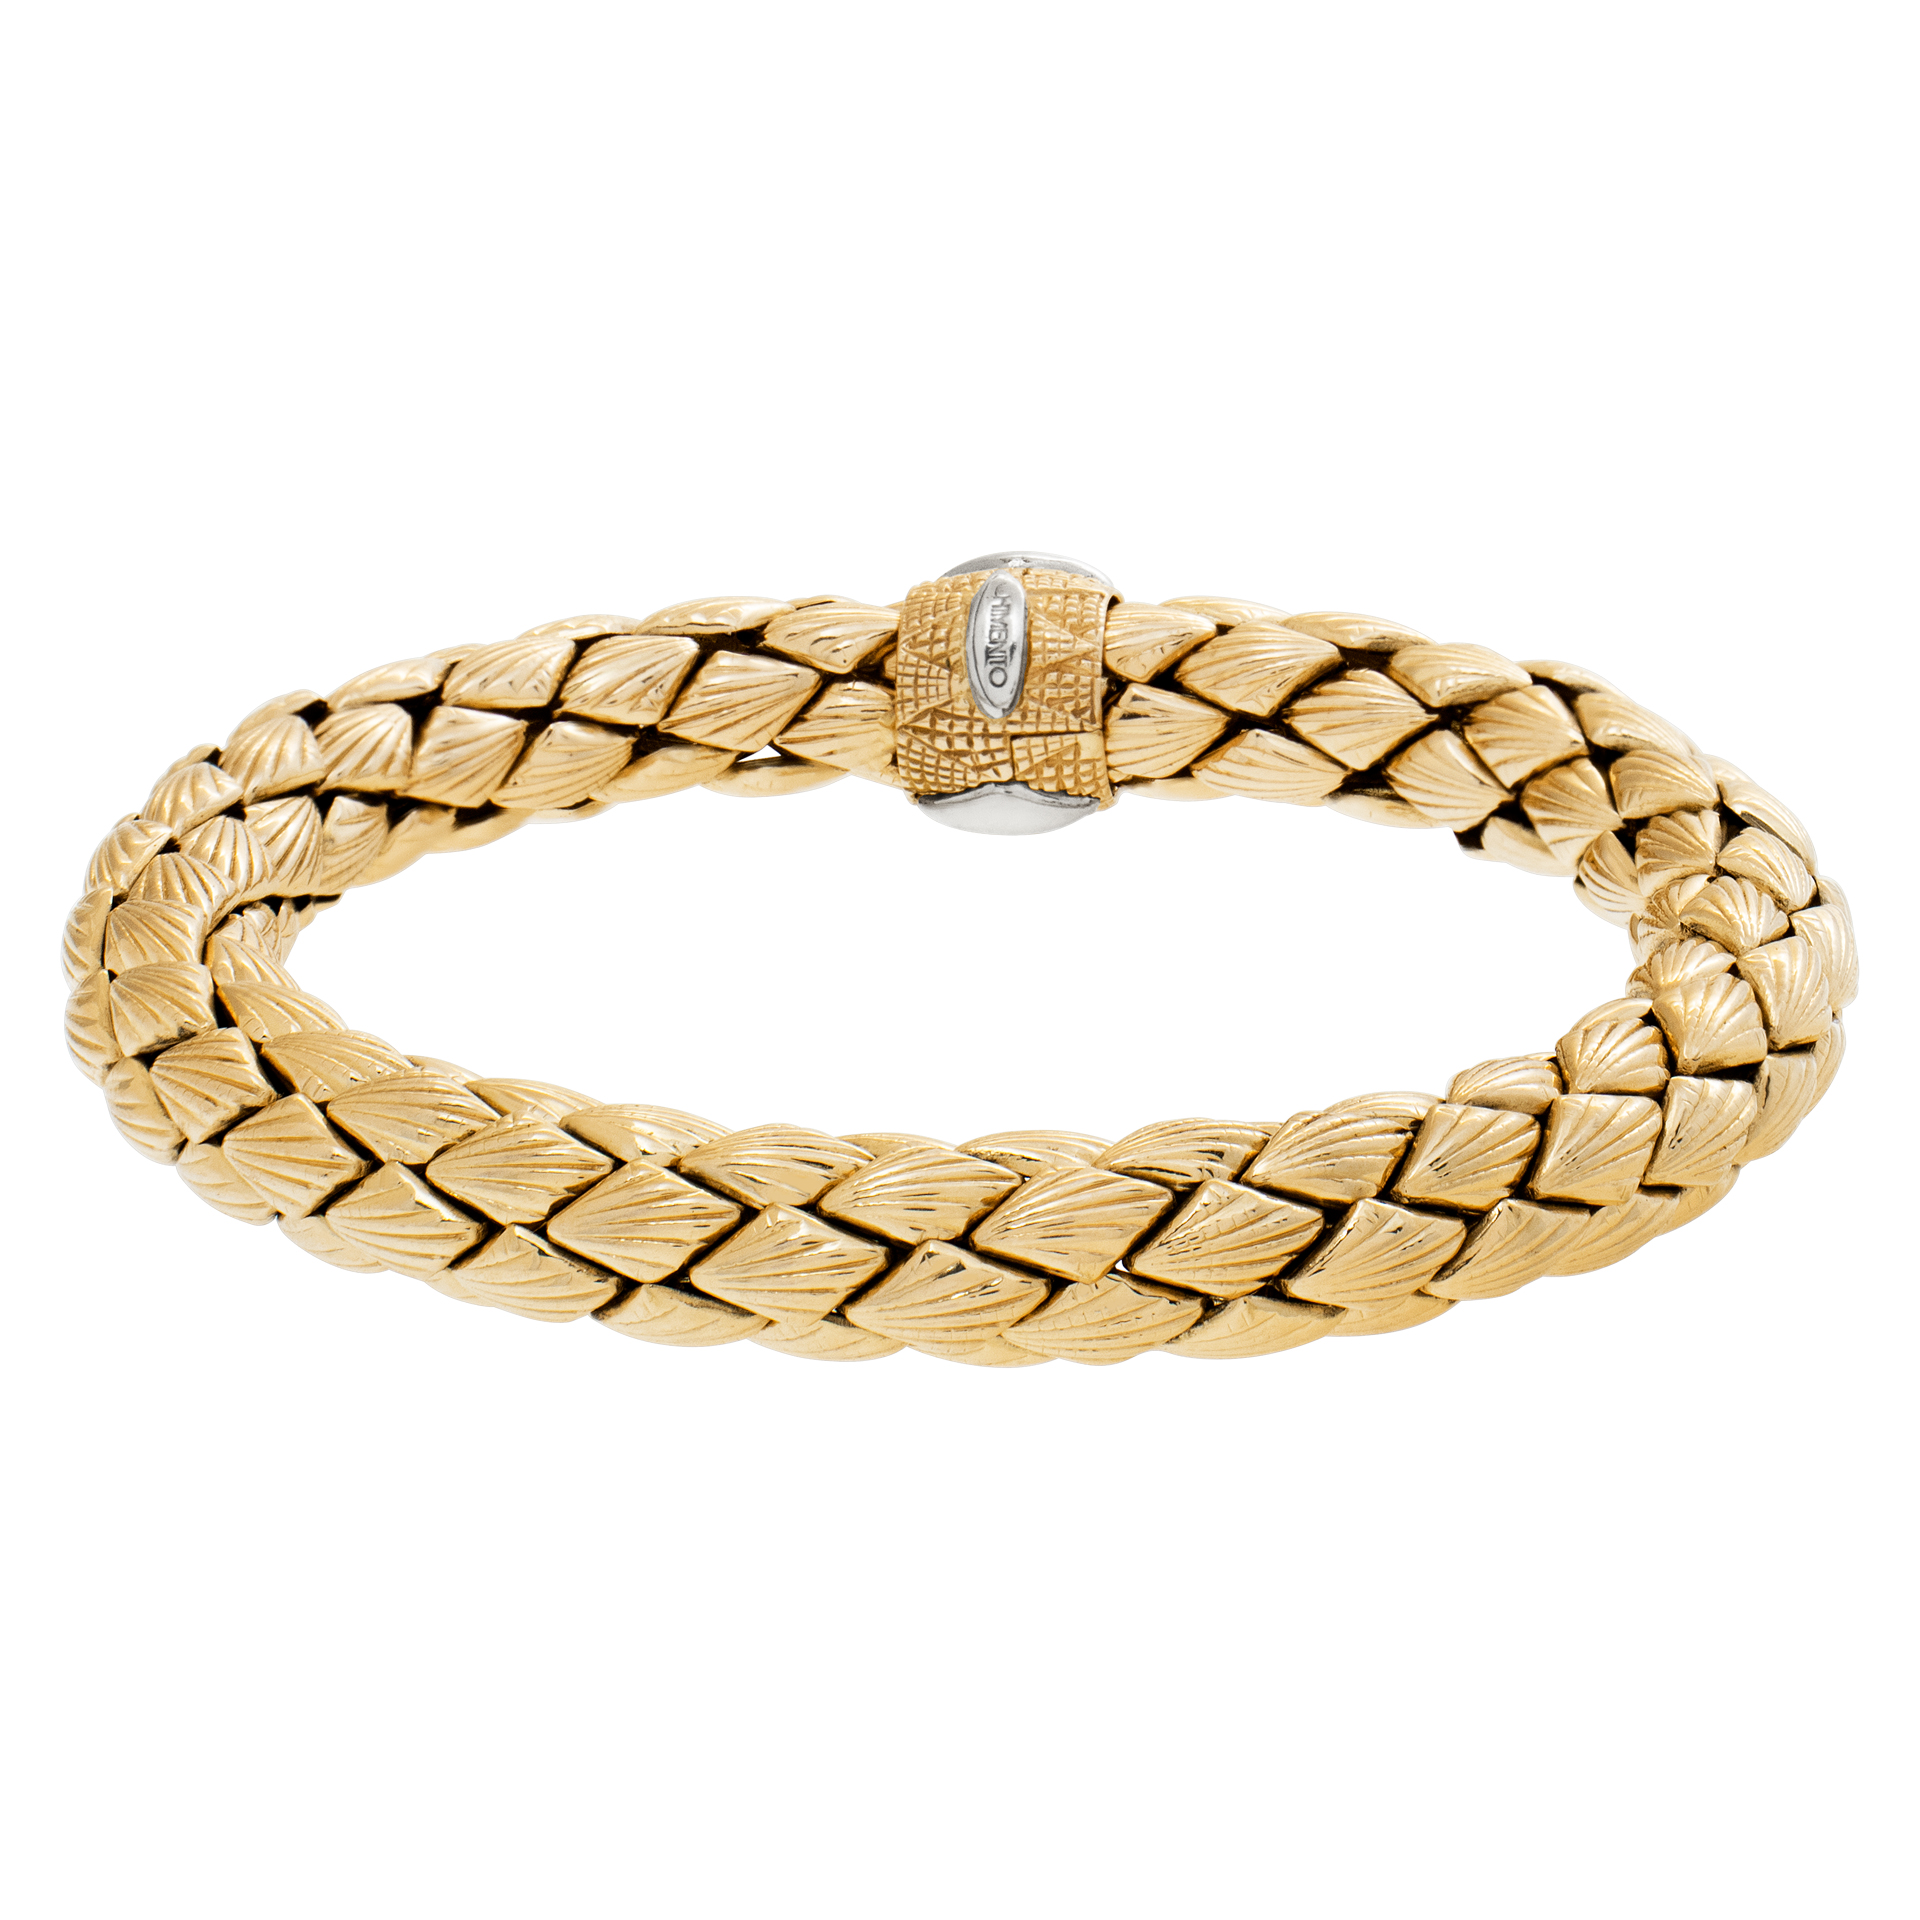 Chimento Stretch bracelet in 18k yellow gold